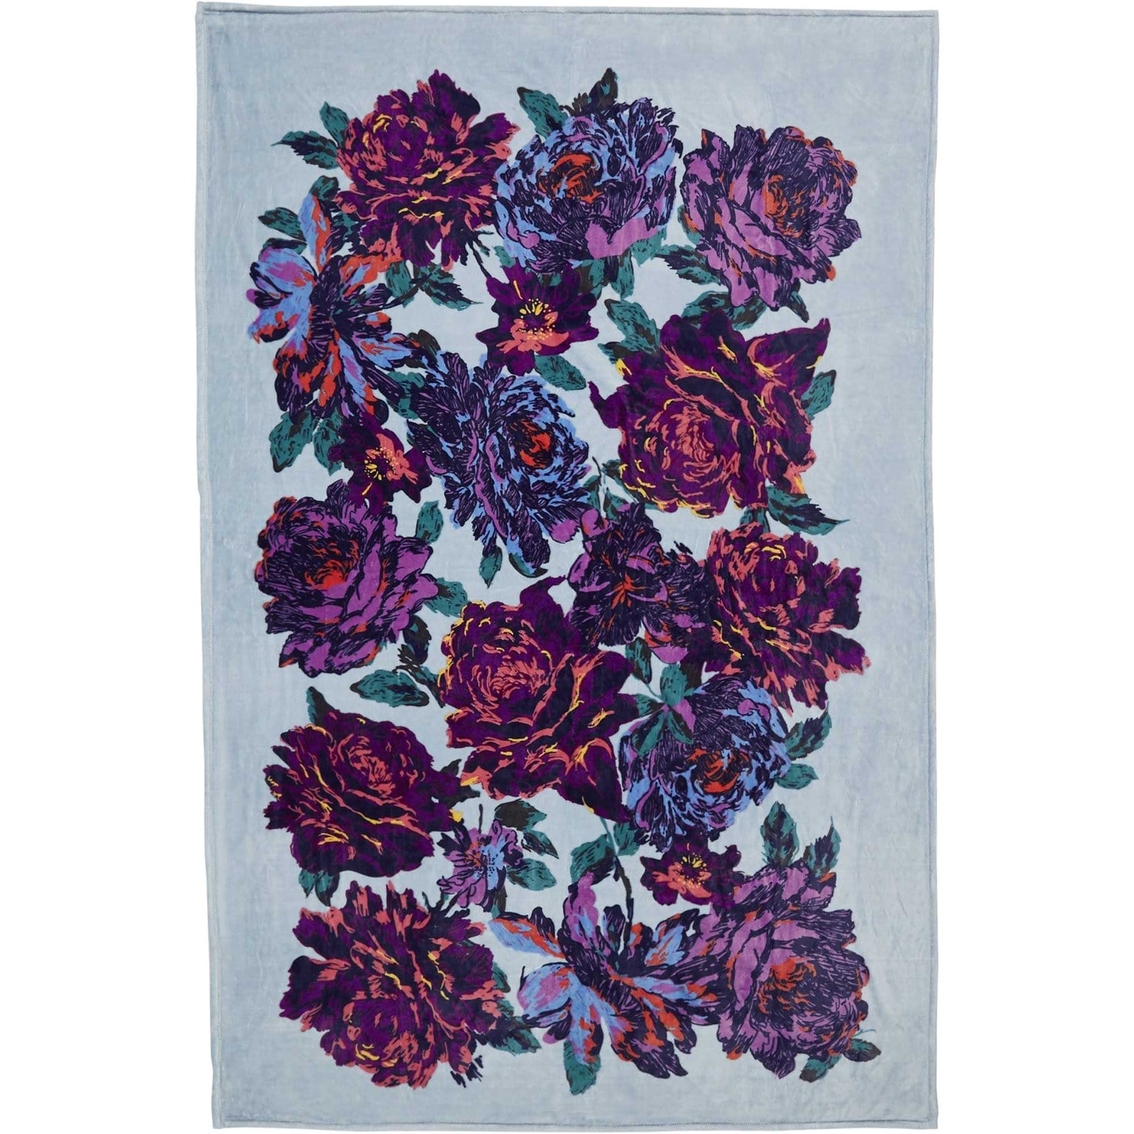 Vera Bradley Fleece Plush Throw Blanket Neon Blooms Blankets Bedding Accessories Household The Exchange